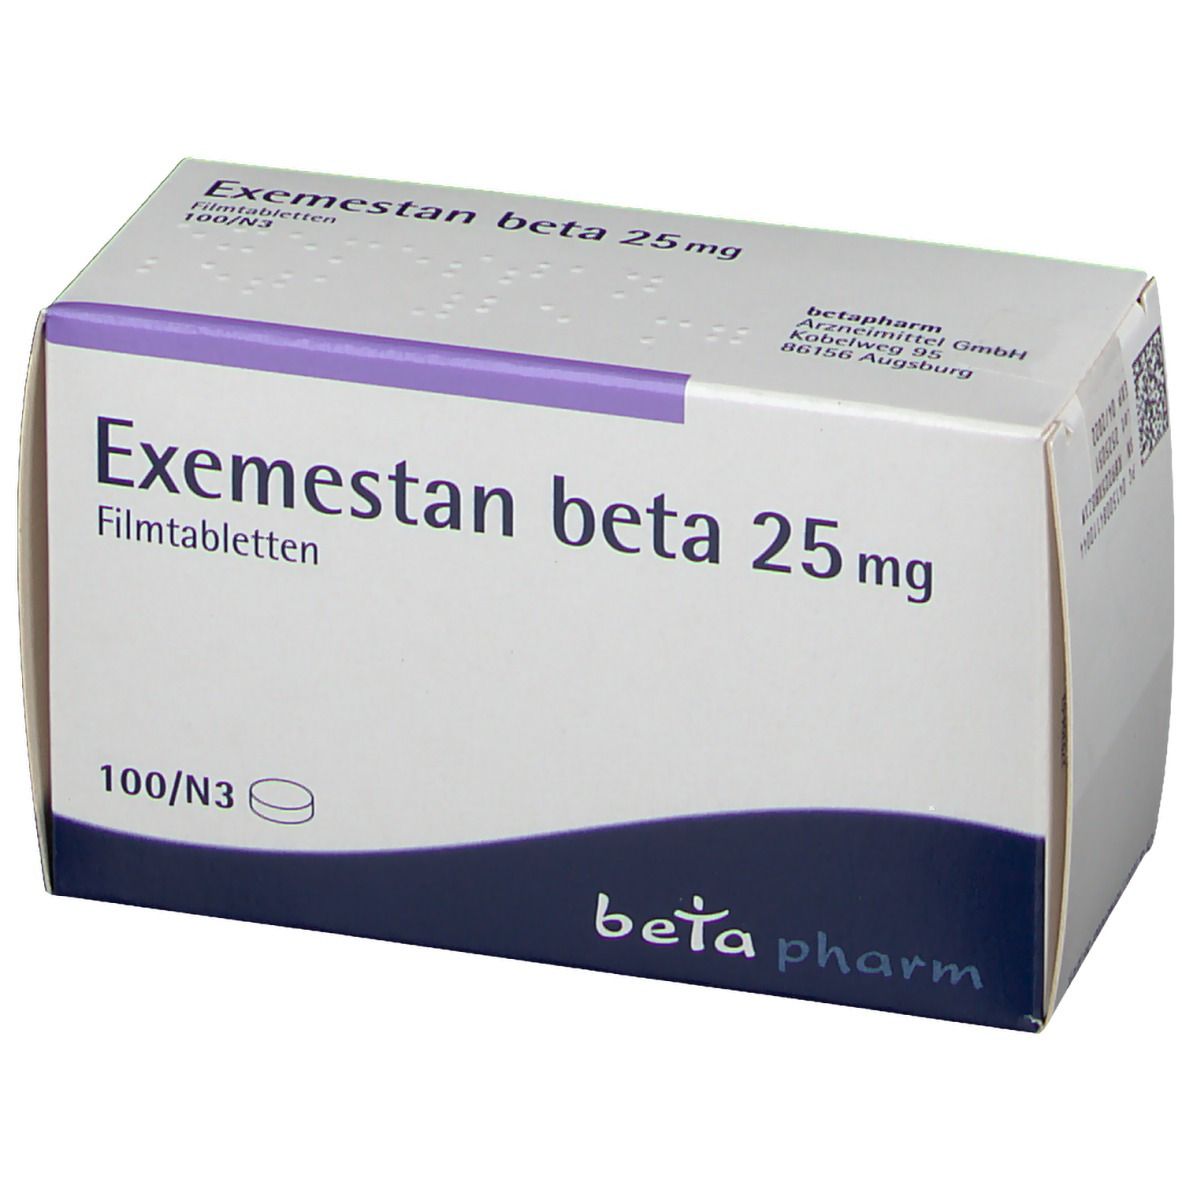 Exemestan beta 25 mg